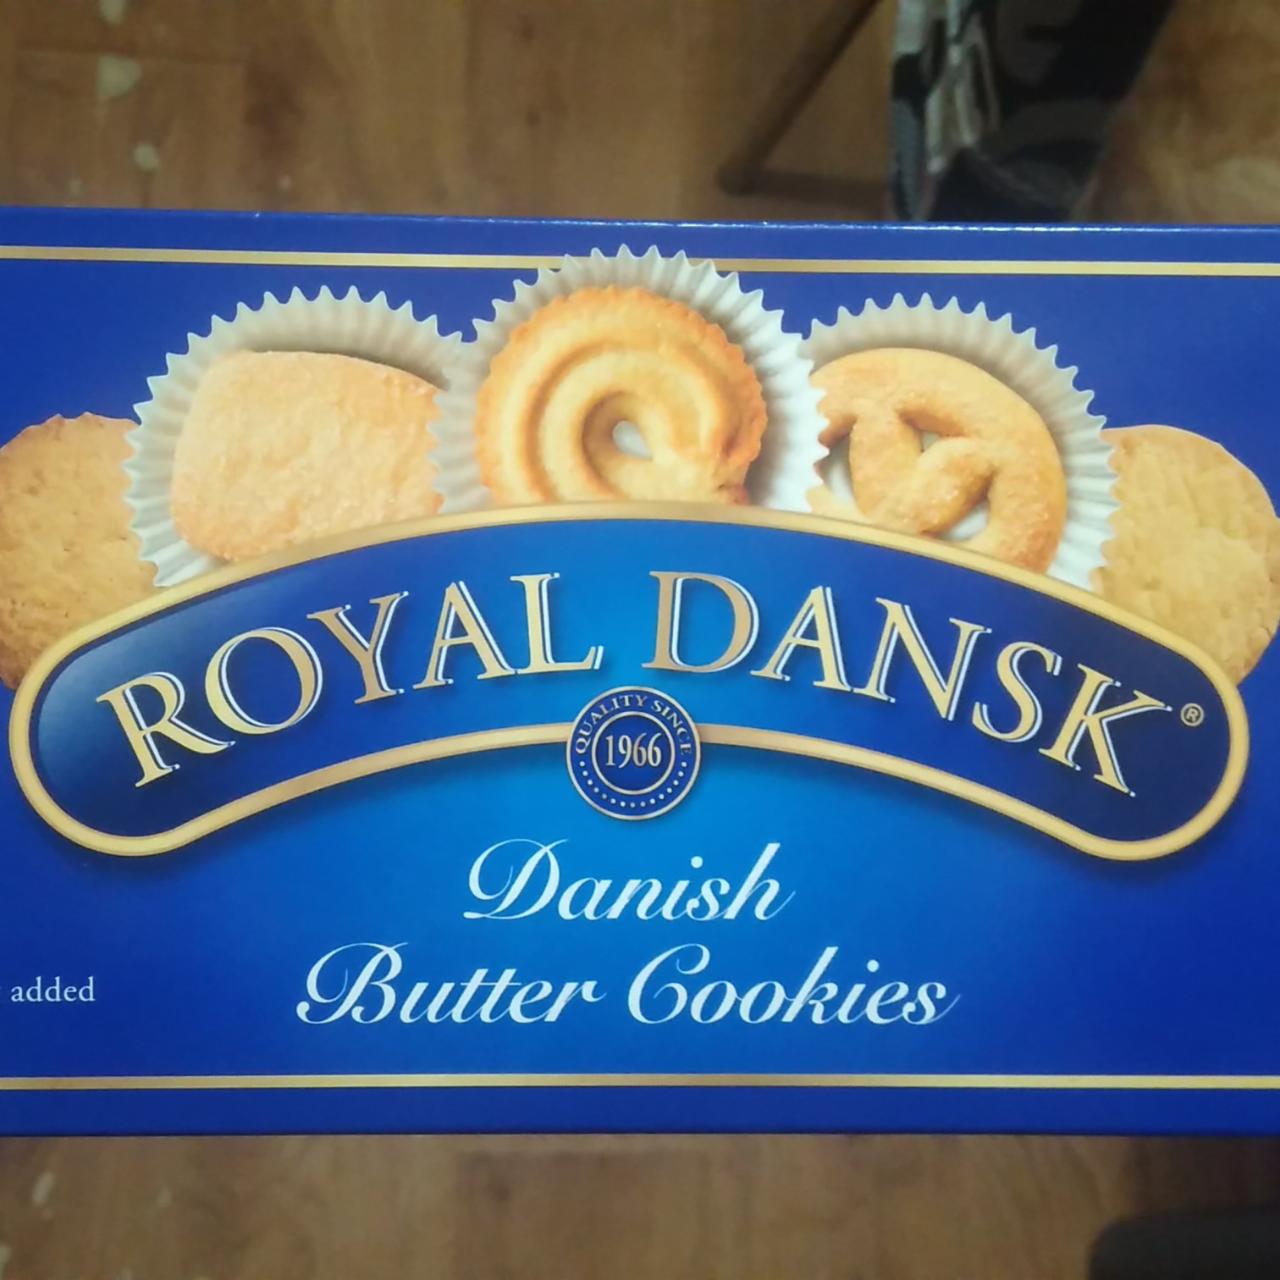 Фото - печенье Danish butter cookies Royal dansk